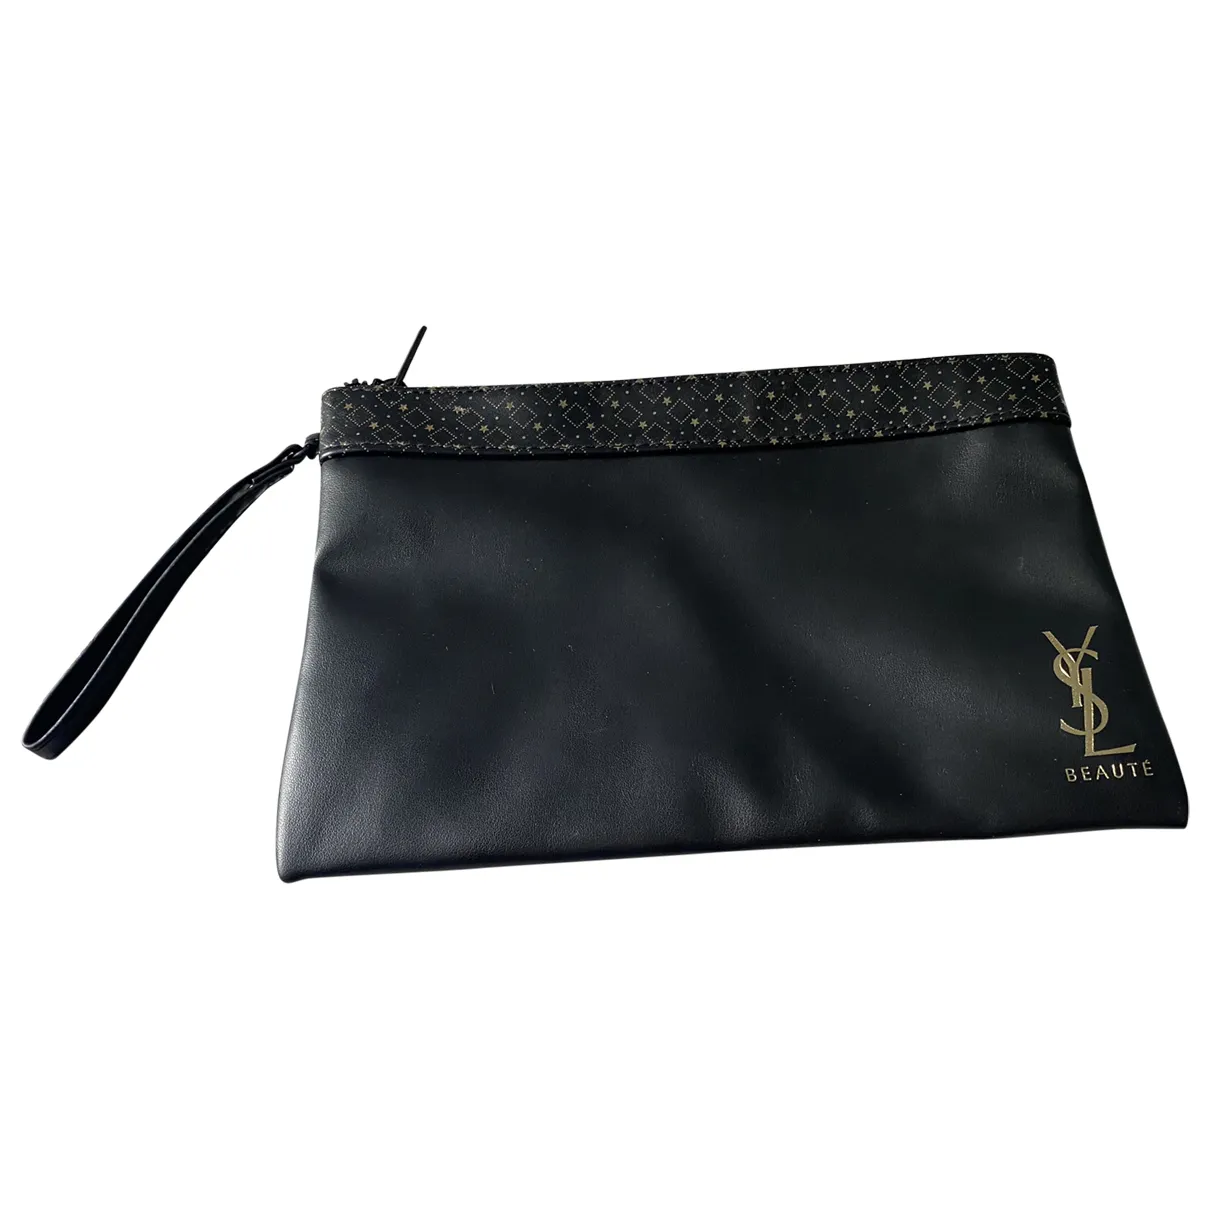 Vegan leather purse Yves Saint Laurent